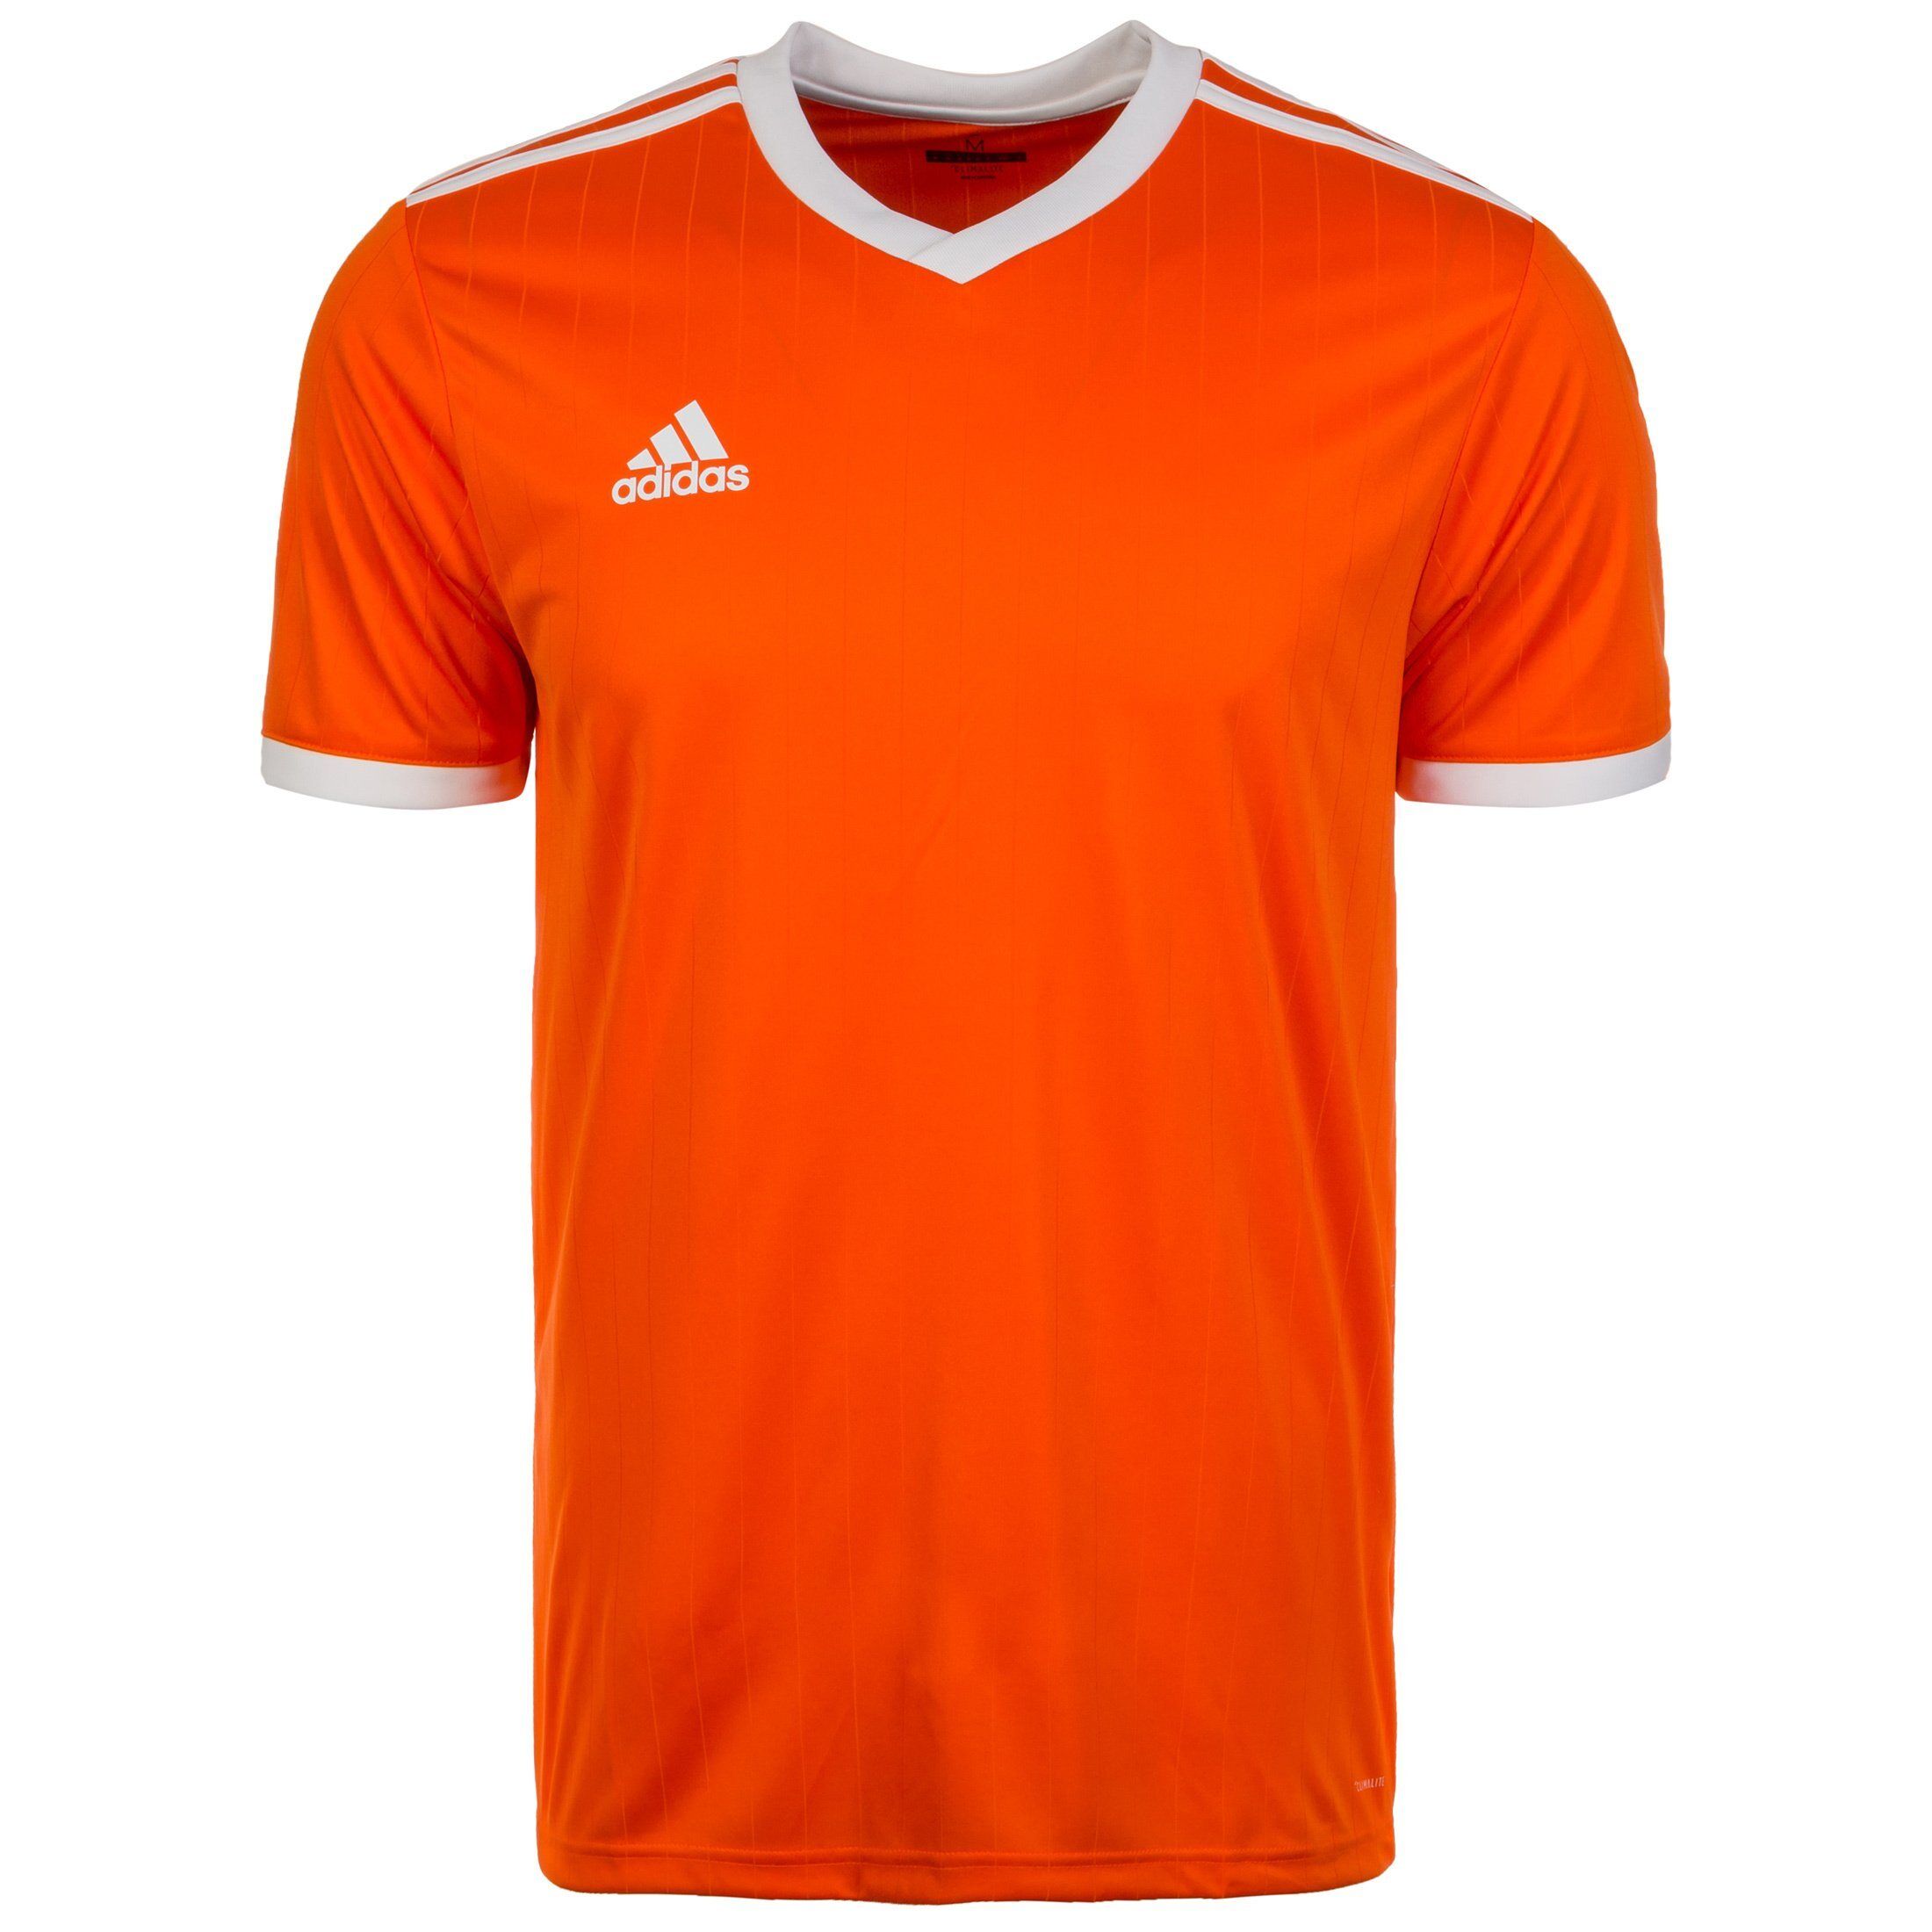 Adidas Performance Fußballtrikot »Tabela 18«, orange-weiß